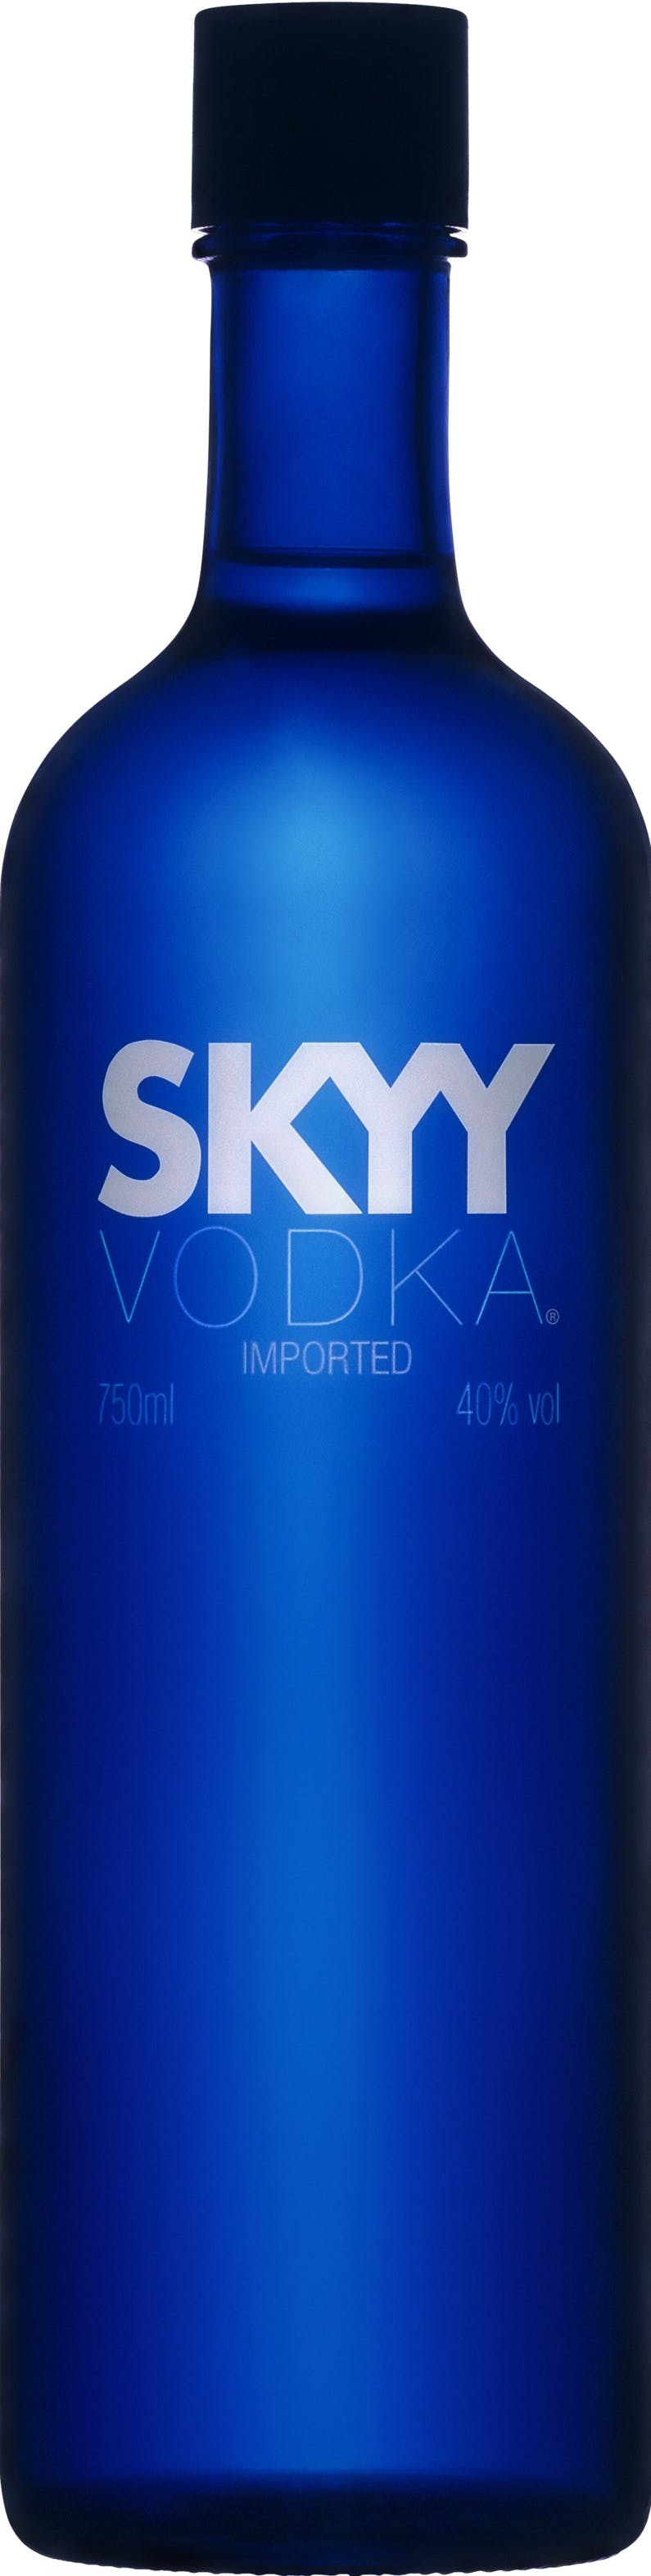 Skyy Vodka 750ml - Vine Republic